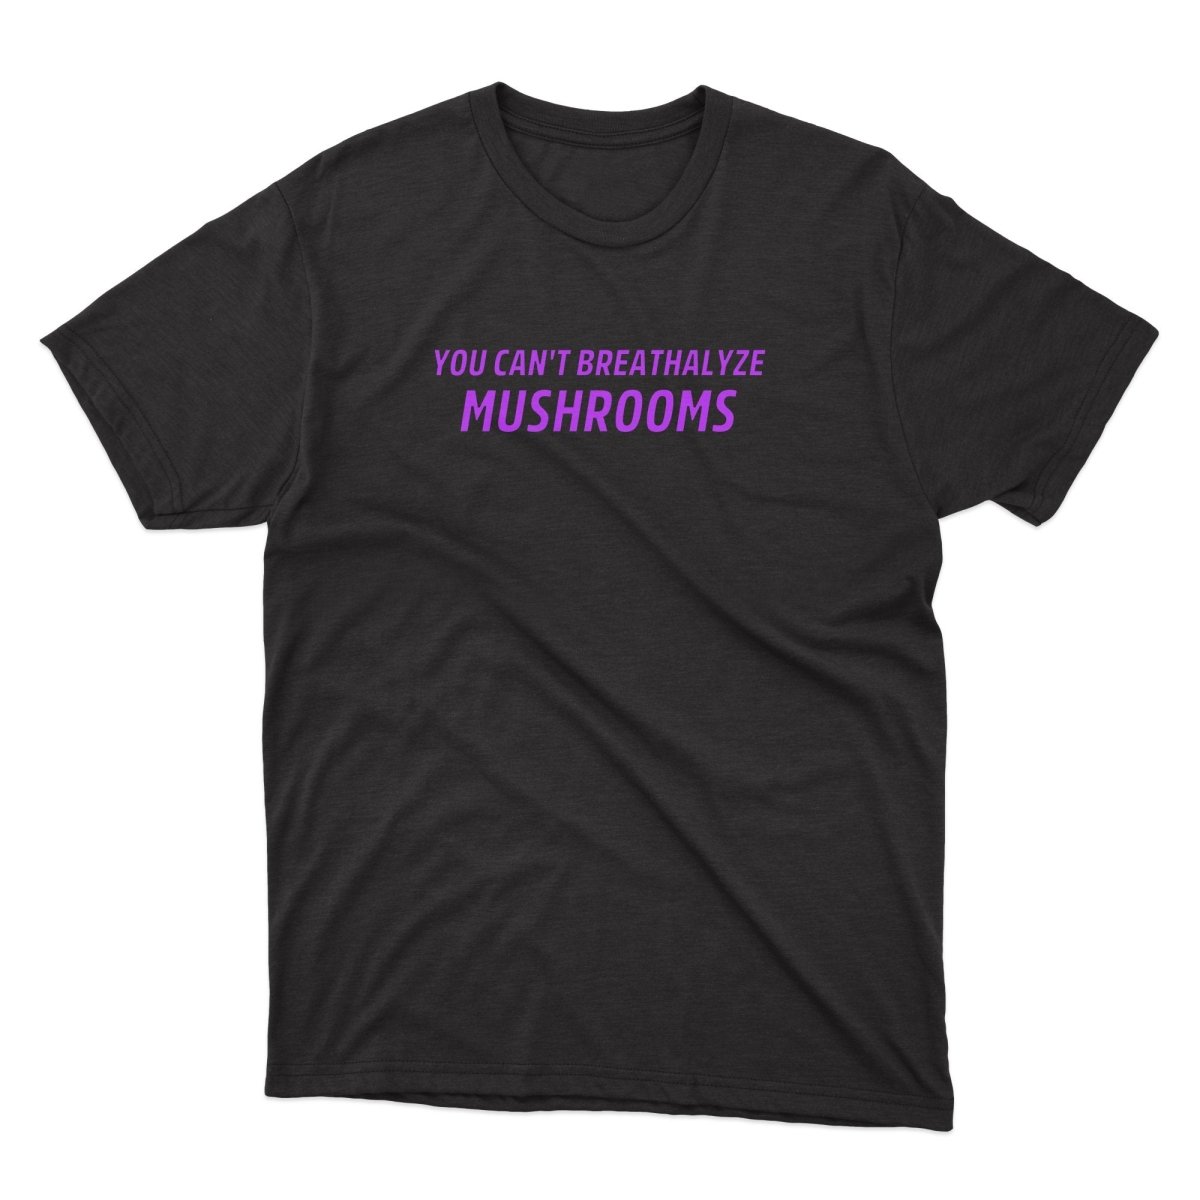 You Can't Breathalyze Mushrooms Shirt - stickerbullYou Can't Breathalyze Mushrooms ShirtShirtsPrintifystickerbull66061992091217128100BlackSa black t - shirt with the words you can't breathalyze mushrooms